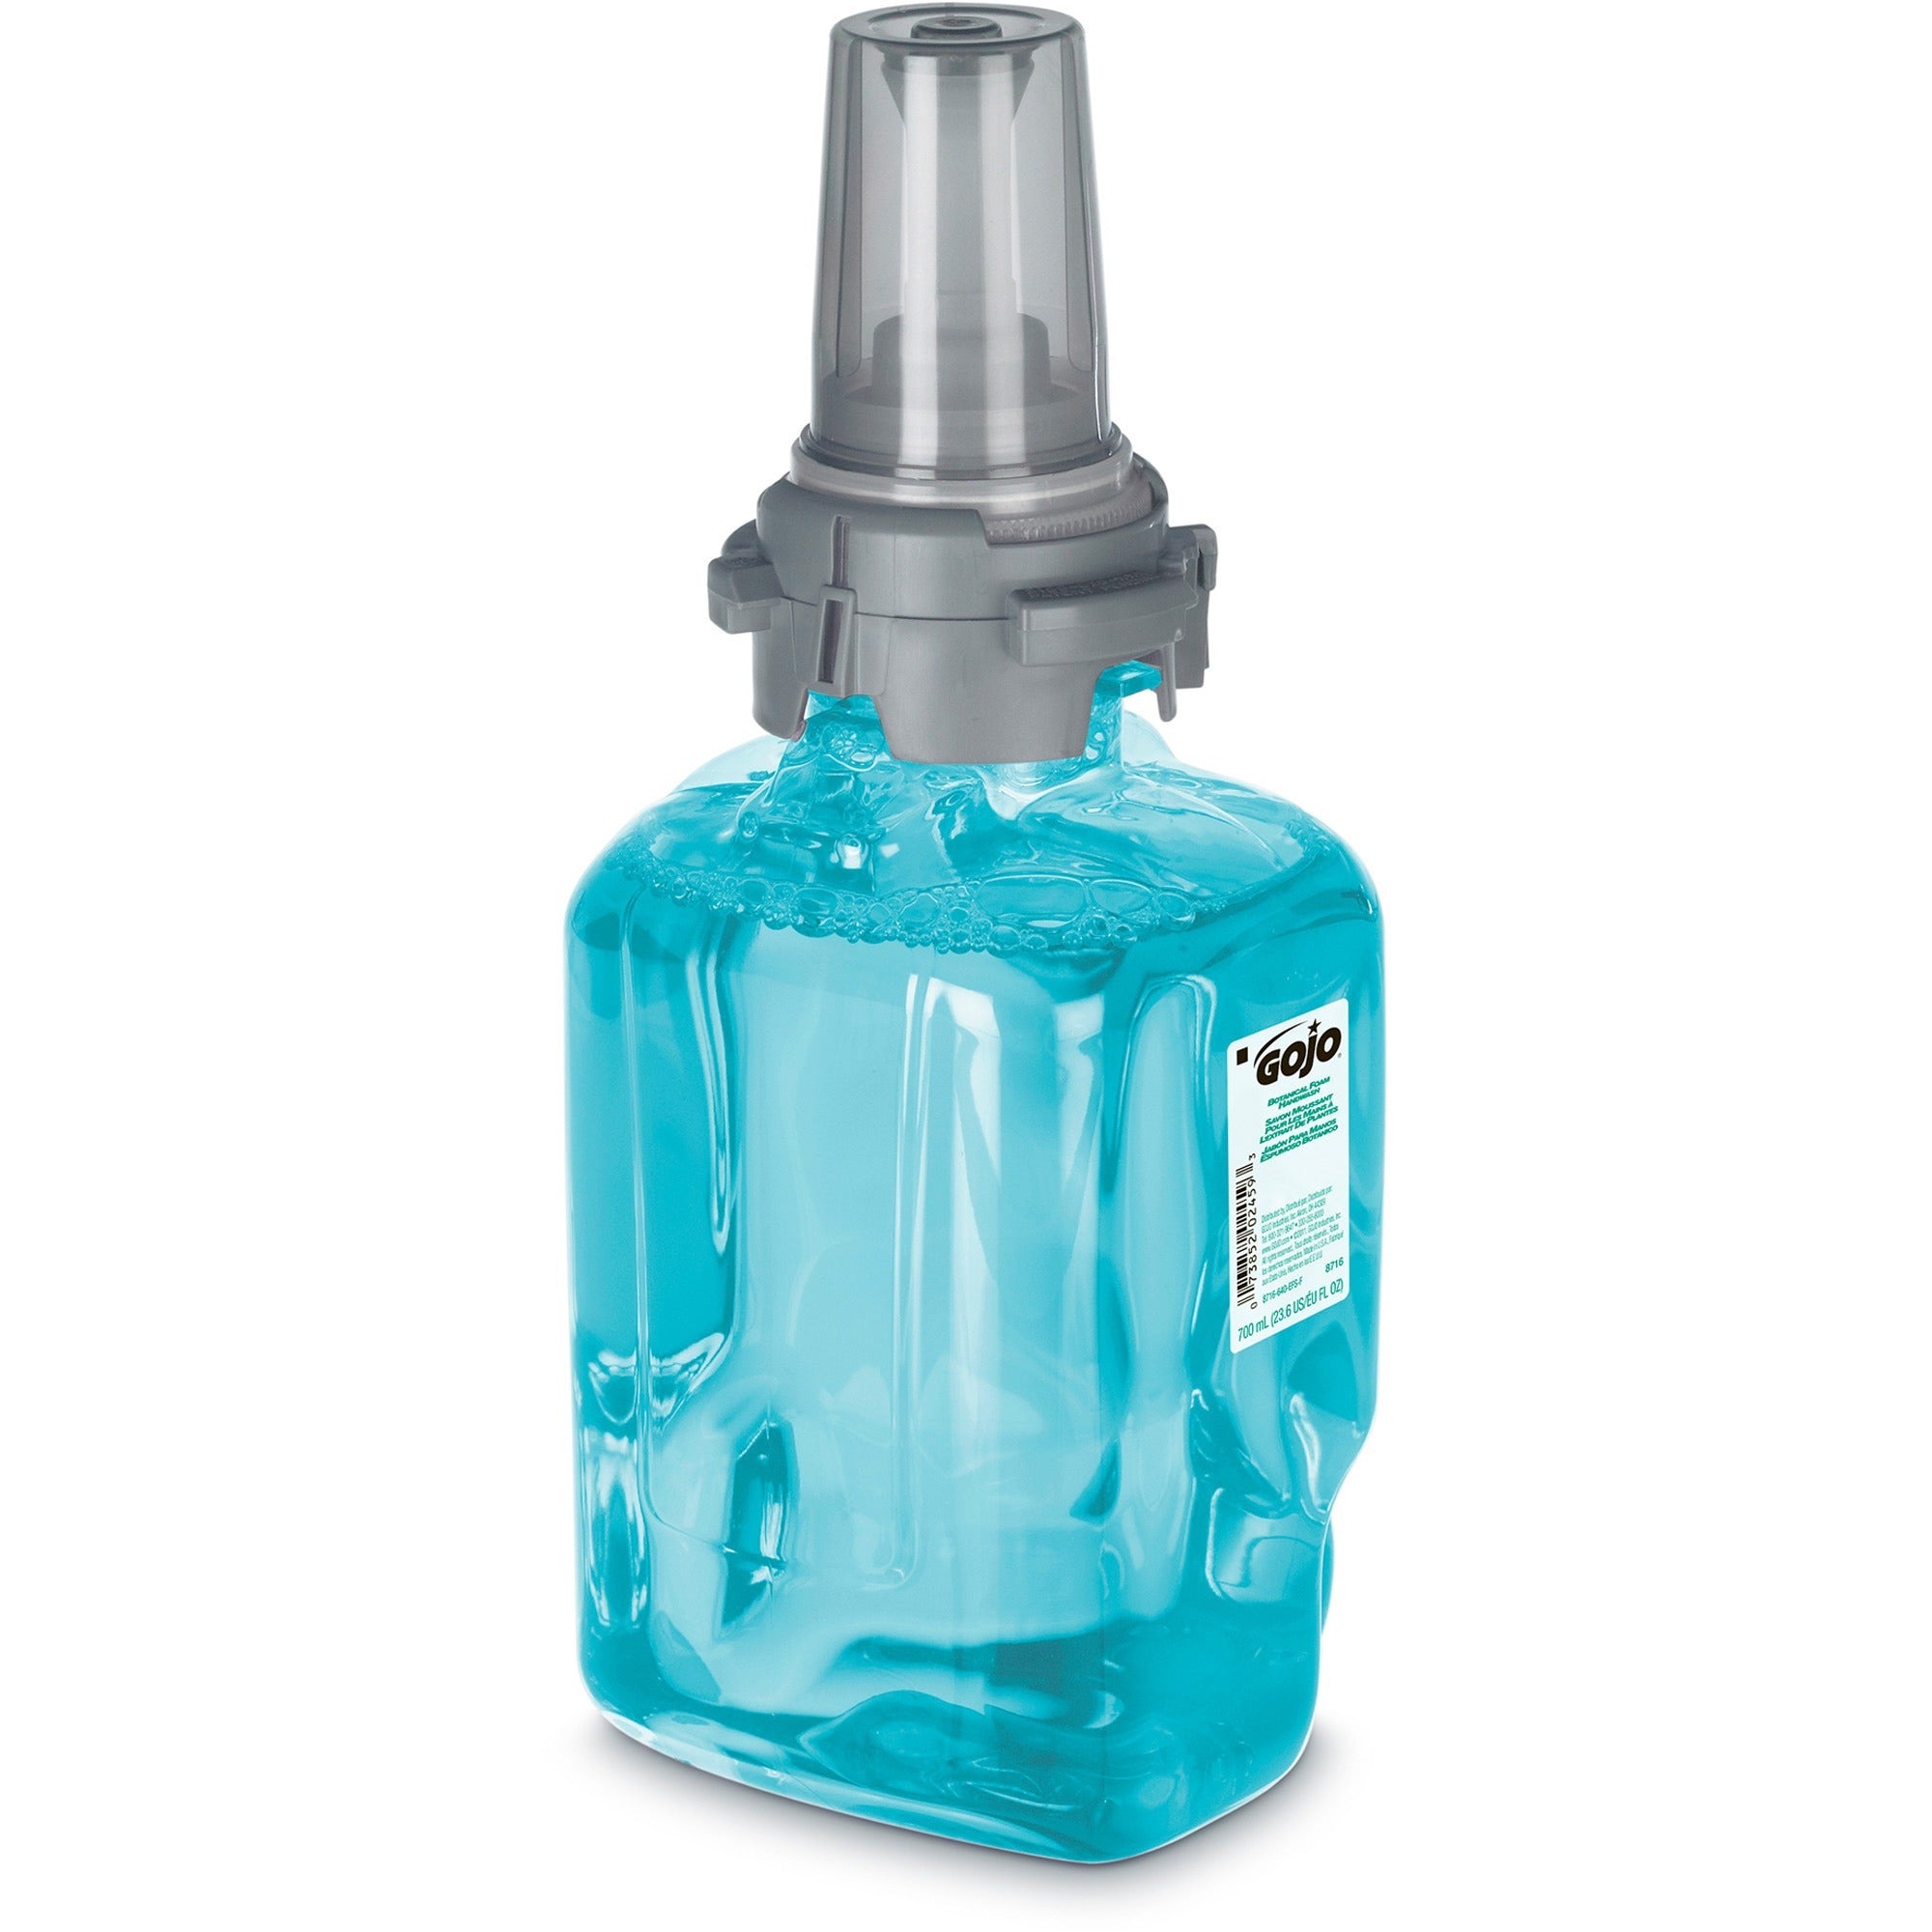 gojo-adx-7-dispenser-refill-botanical-foam-soap-botanical-scentfor-237-fl-oz-700-ml-pump-bottle-dispenser-skin-hand-moisturizing-emerald-green-rich-lather-bio-based-4-carton_goj871604ct - 3